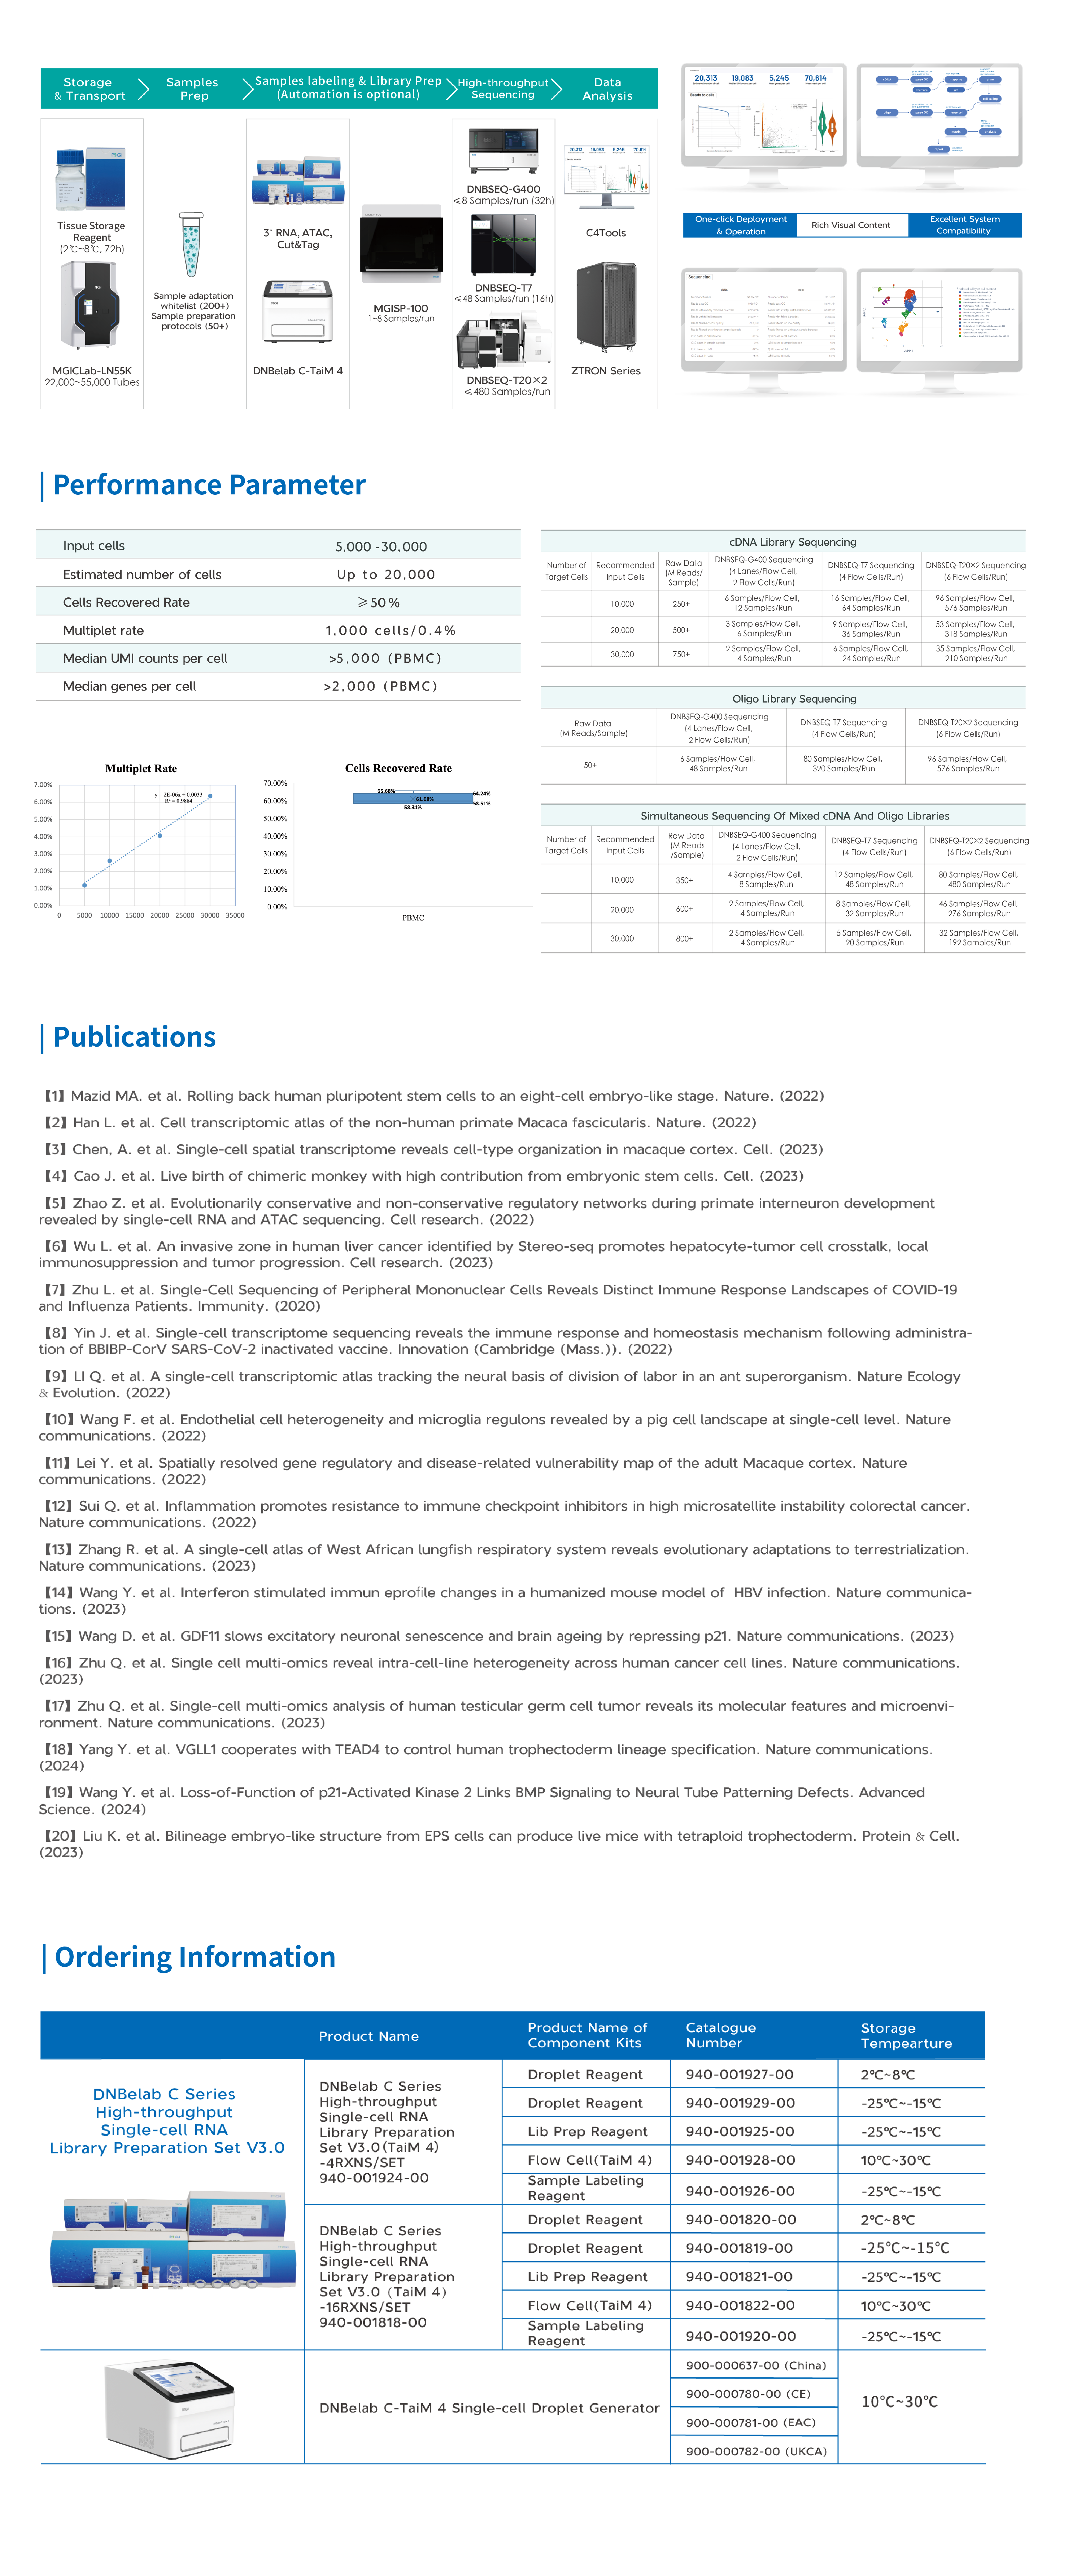 DNBelab C Series High-throughput Single-cell RNA Library Preparation Set V3.0